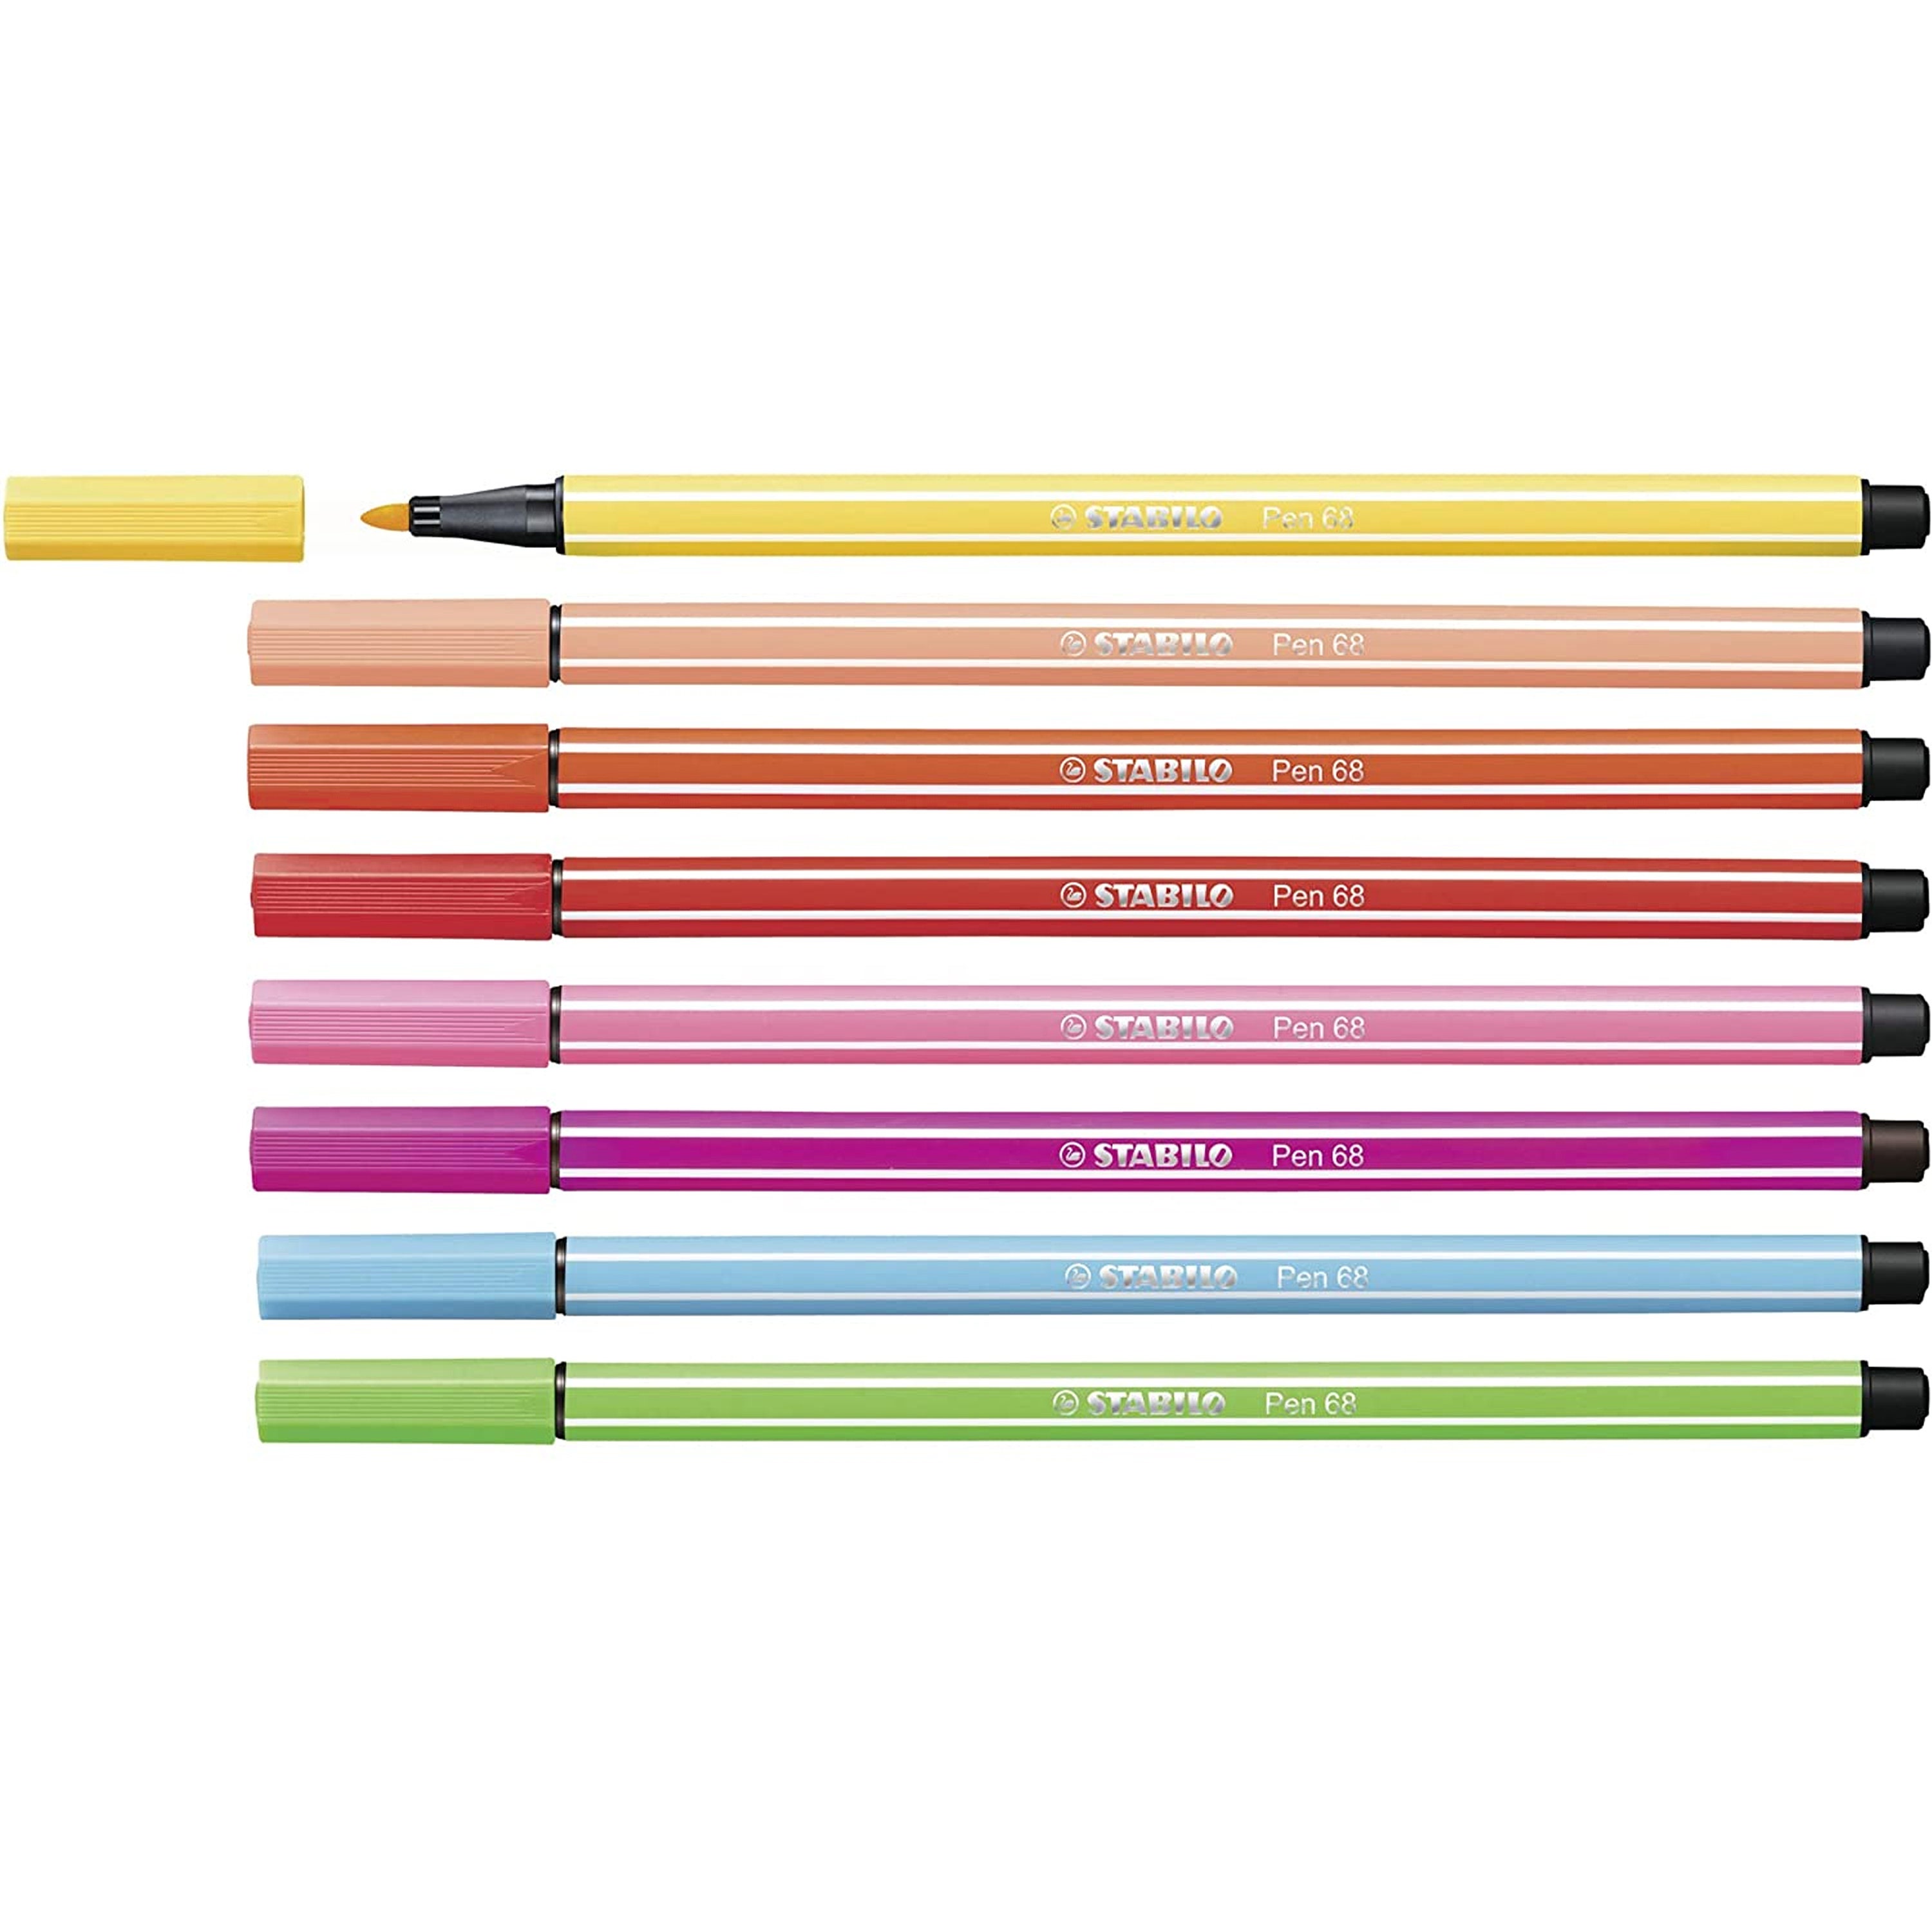 STABILO Pen 68 Premium Felt Tip Fineliner Pens - Fibre tip - 1.0mm